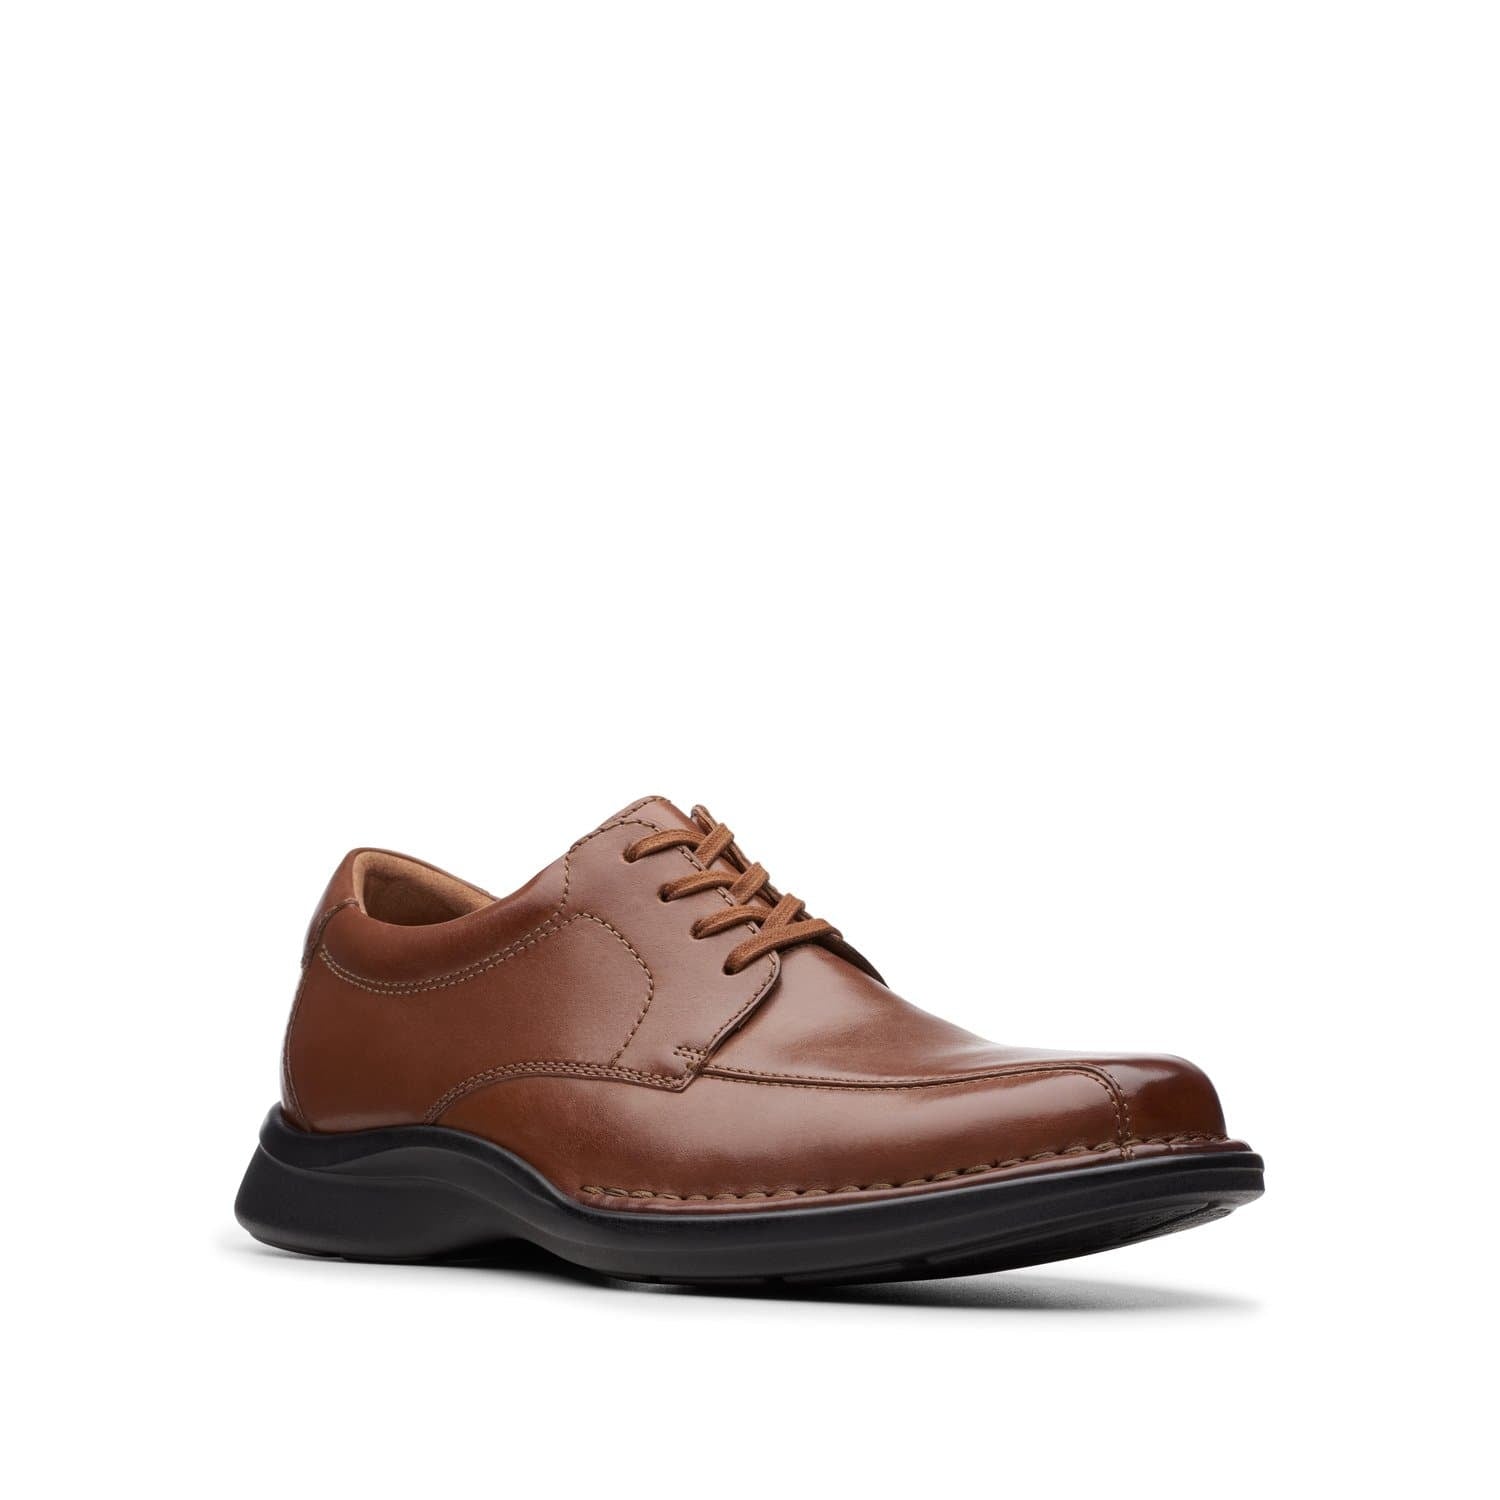 Clarks-Kempton-Run-Men's-Shoes-Tan-Leather-26145479